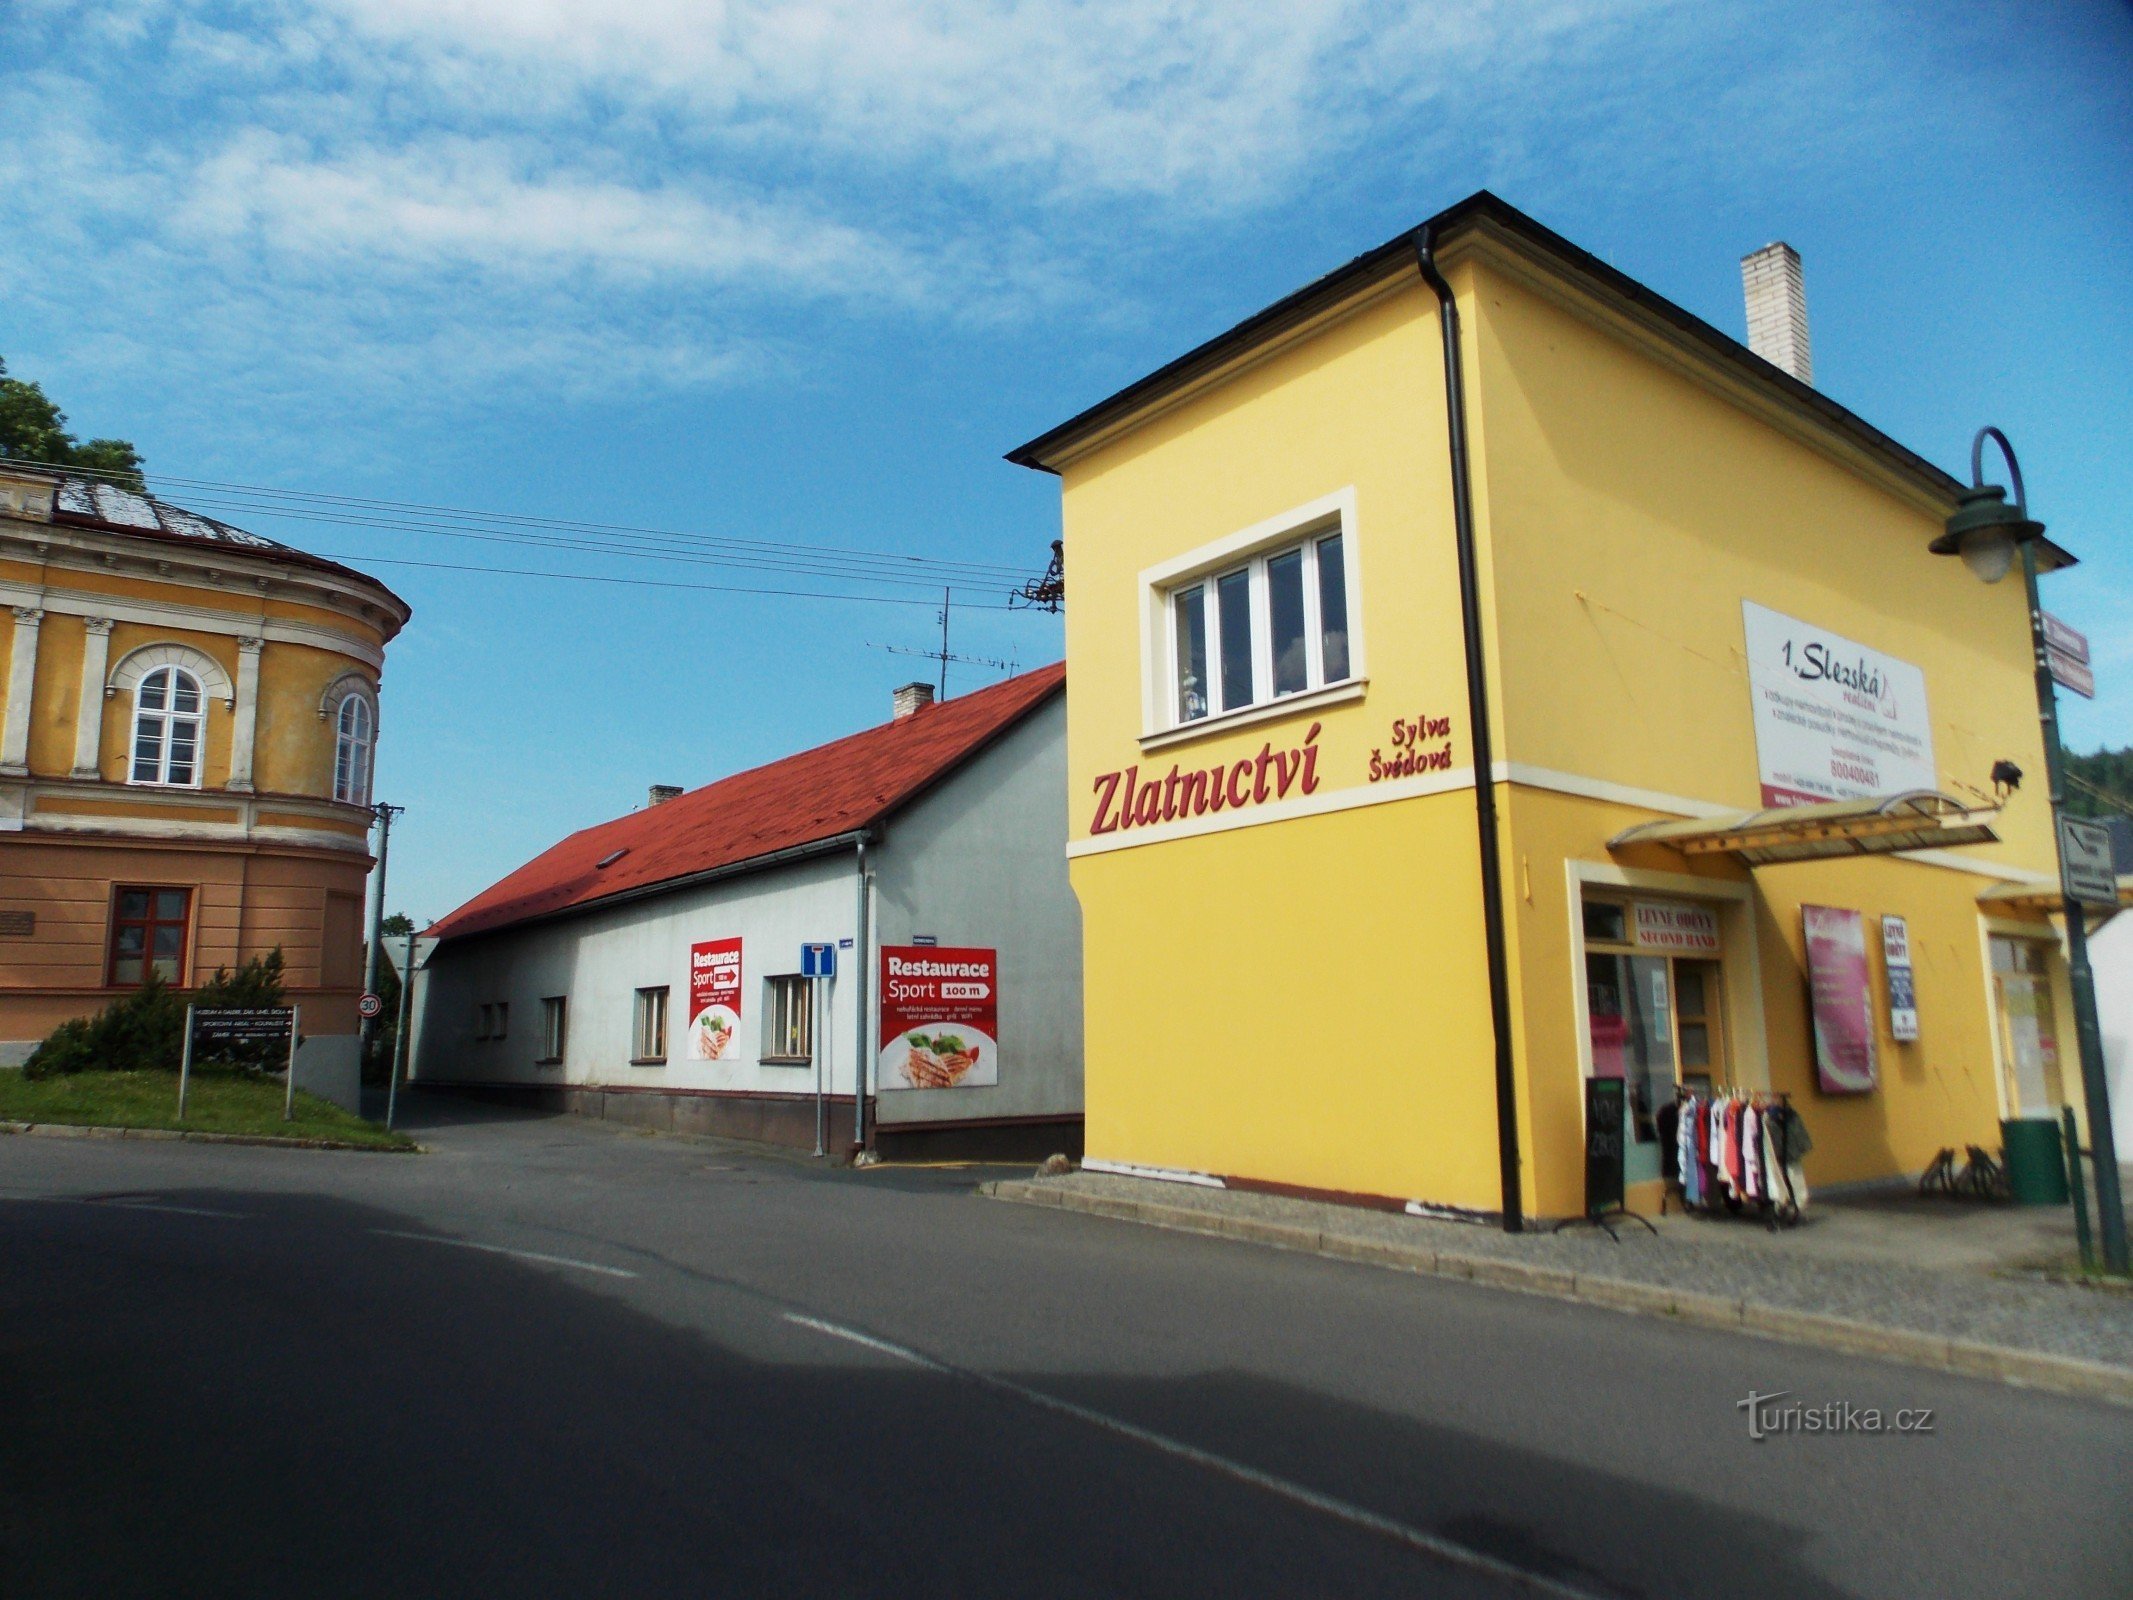 Dwalen door de Zámecká-straat in Hradec nad Moravicí